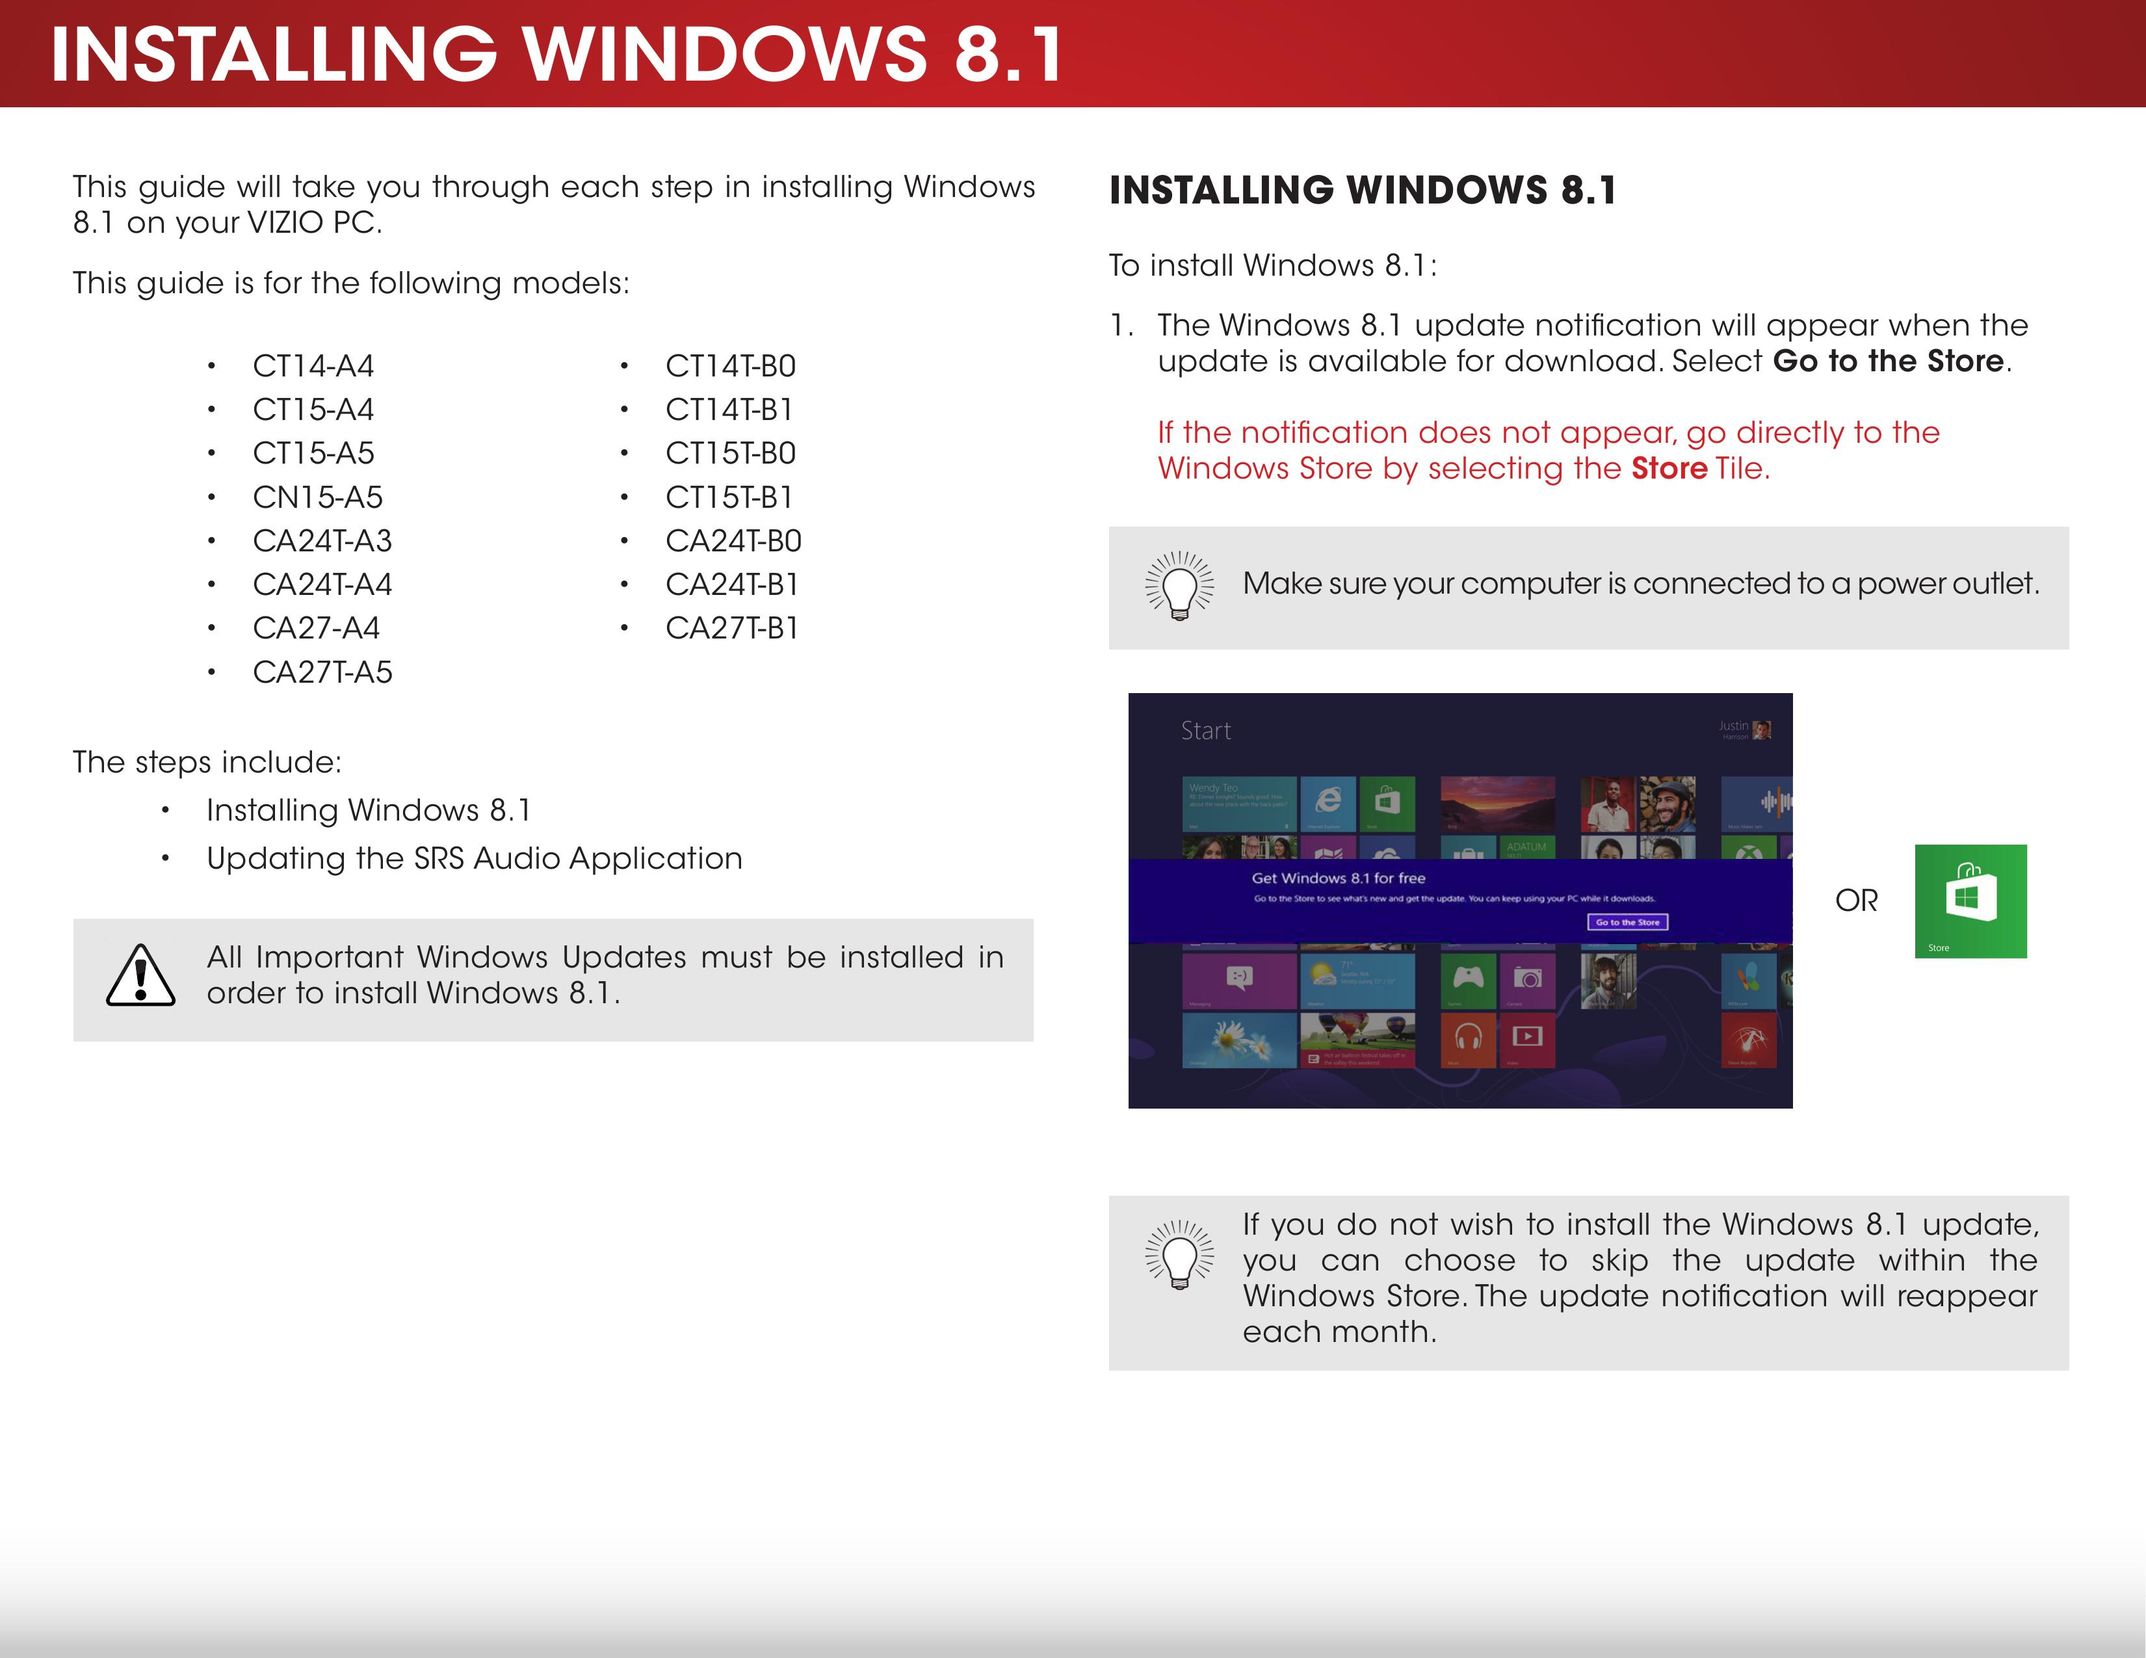 Microsoft CA24T-A3 Window User Manual